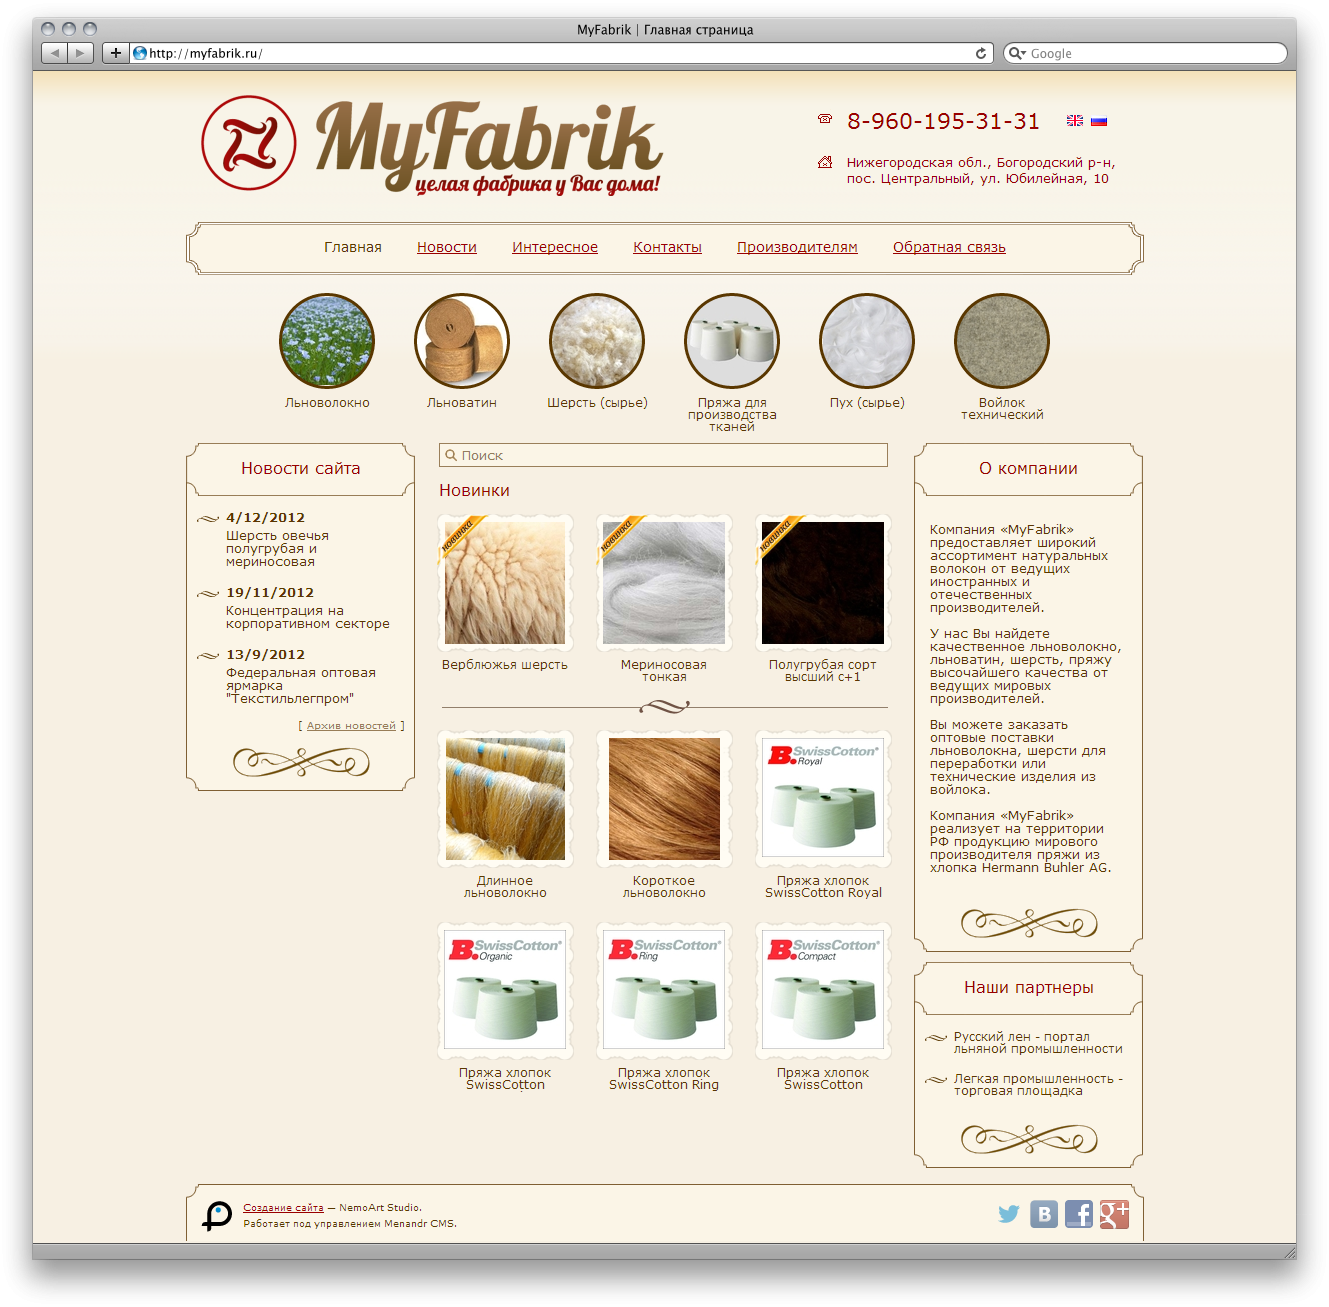 MyFabrik 2.0 - интернет-каталог шерсти и пряжи (Menandr CMS)